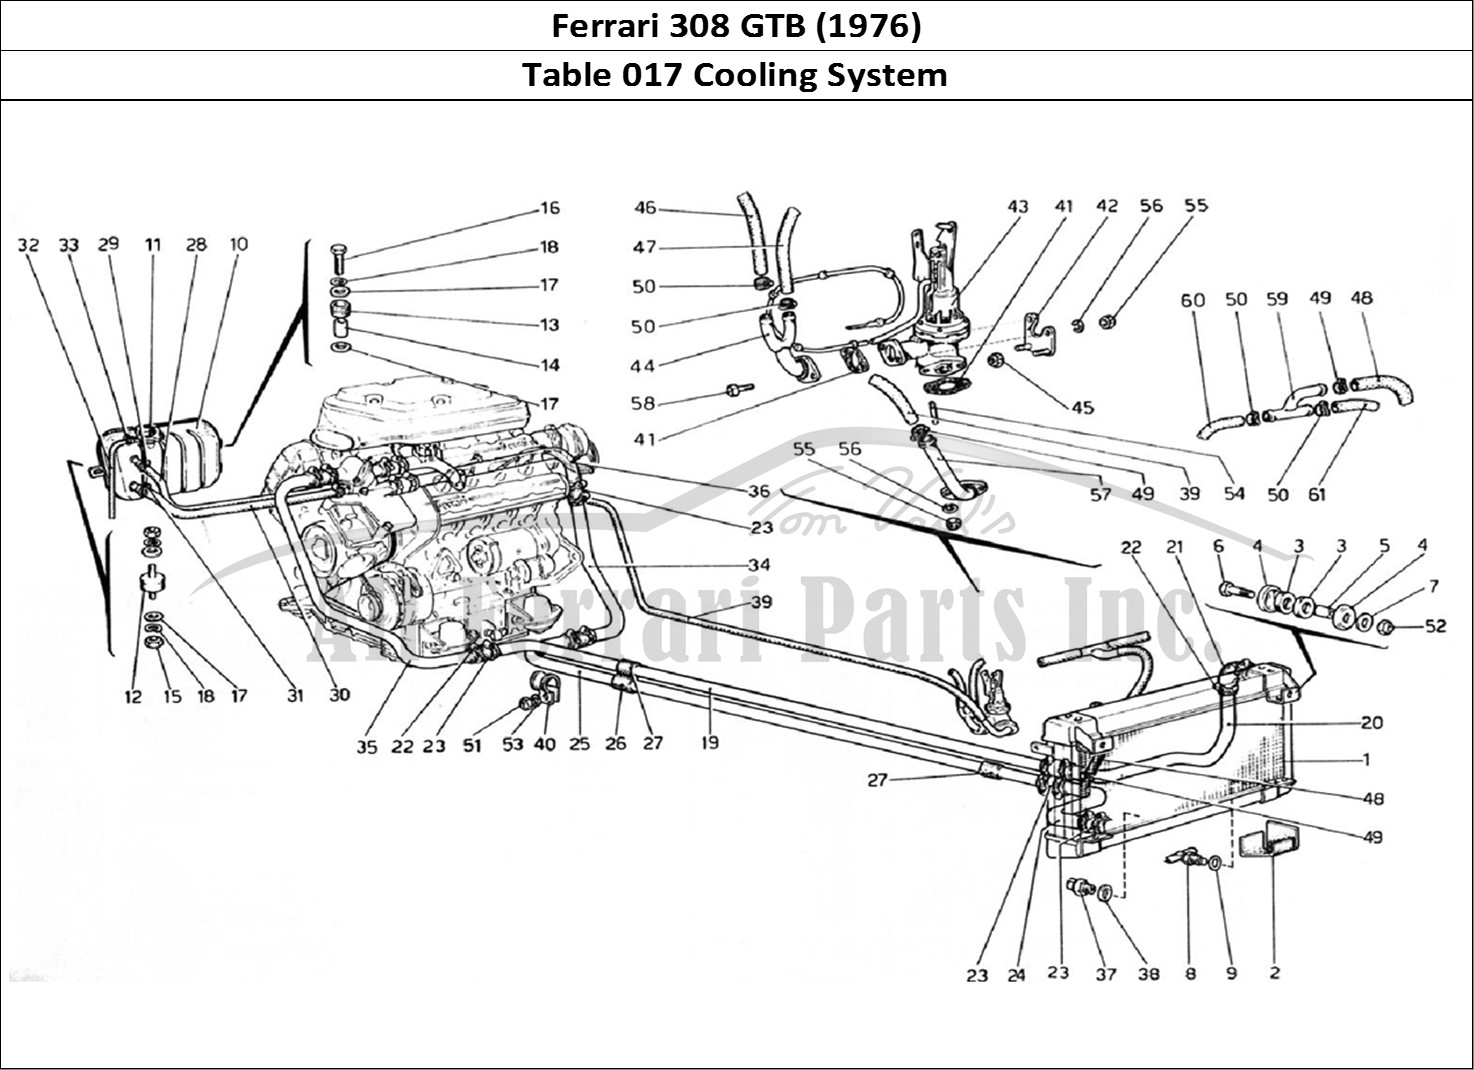 Ferrari Parts Ferrari 308 GTB (1976) Page 017 Cooling System